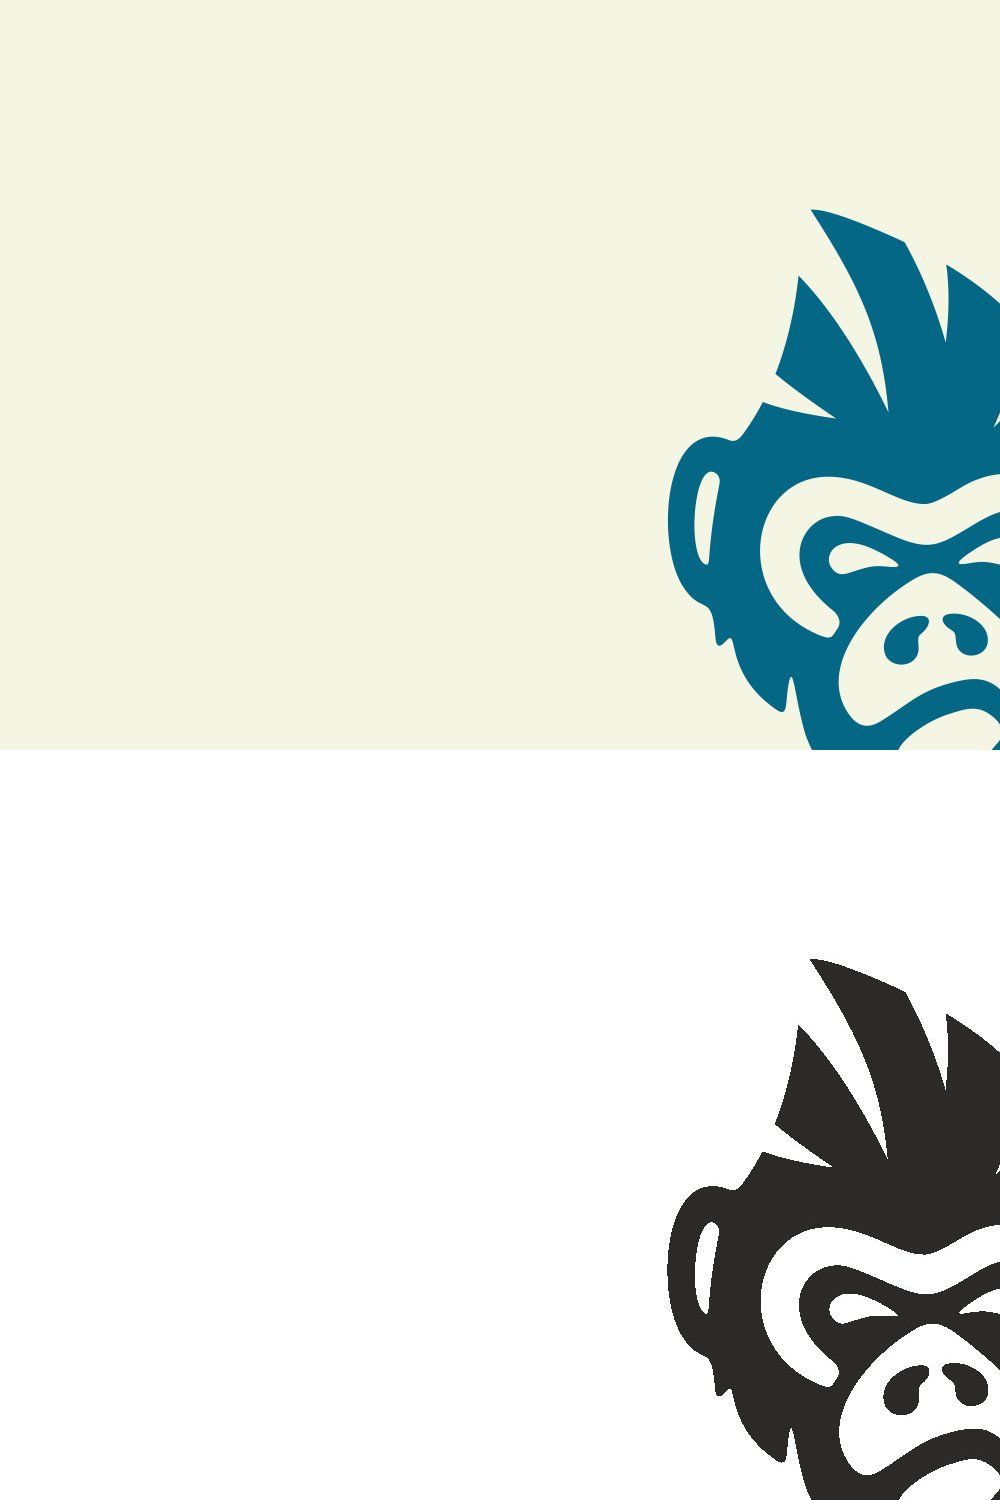 Gorilla logo pinterest preview image.